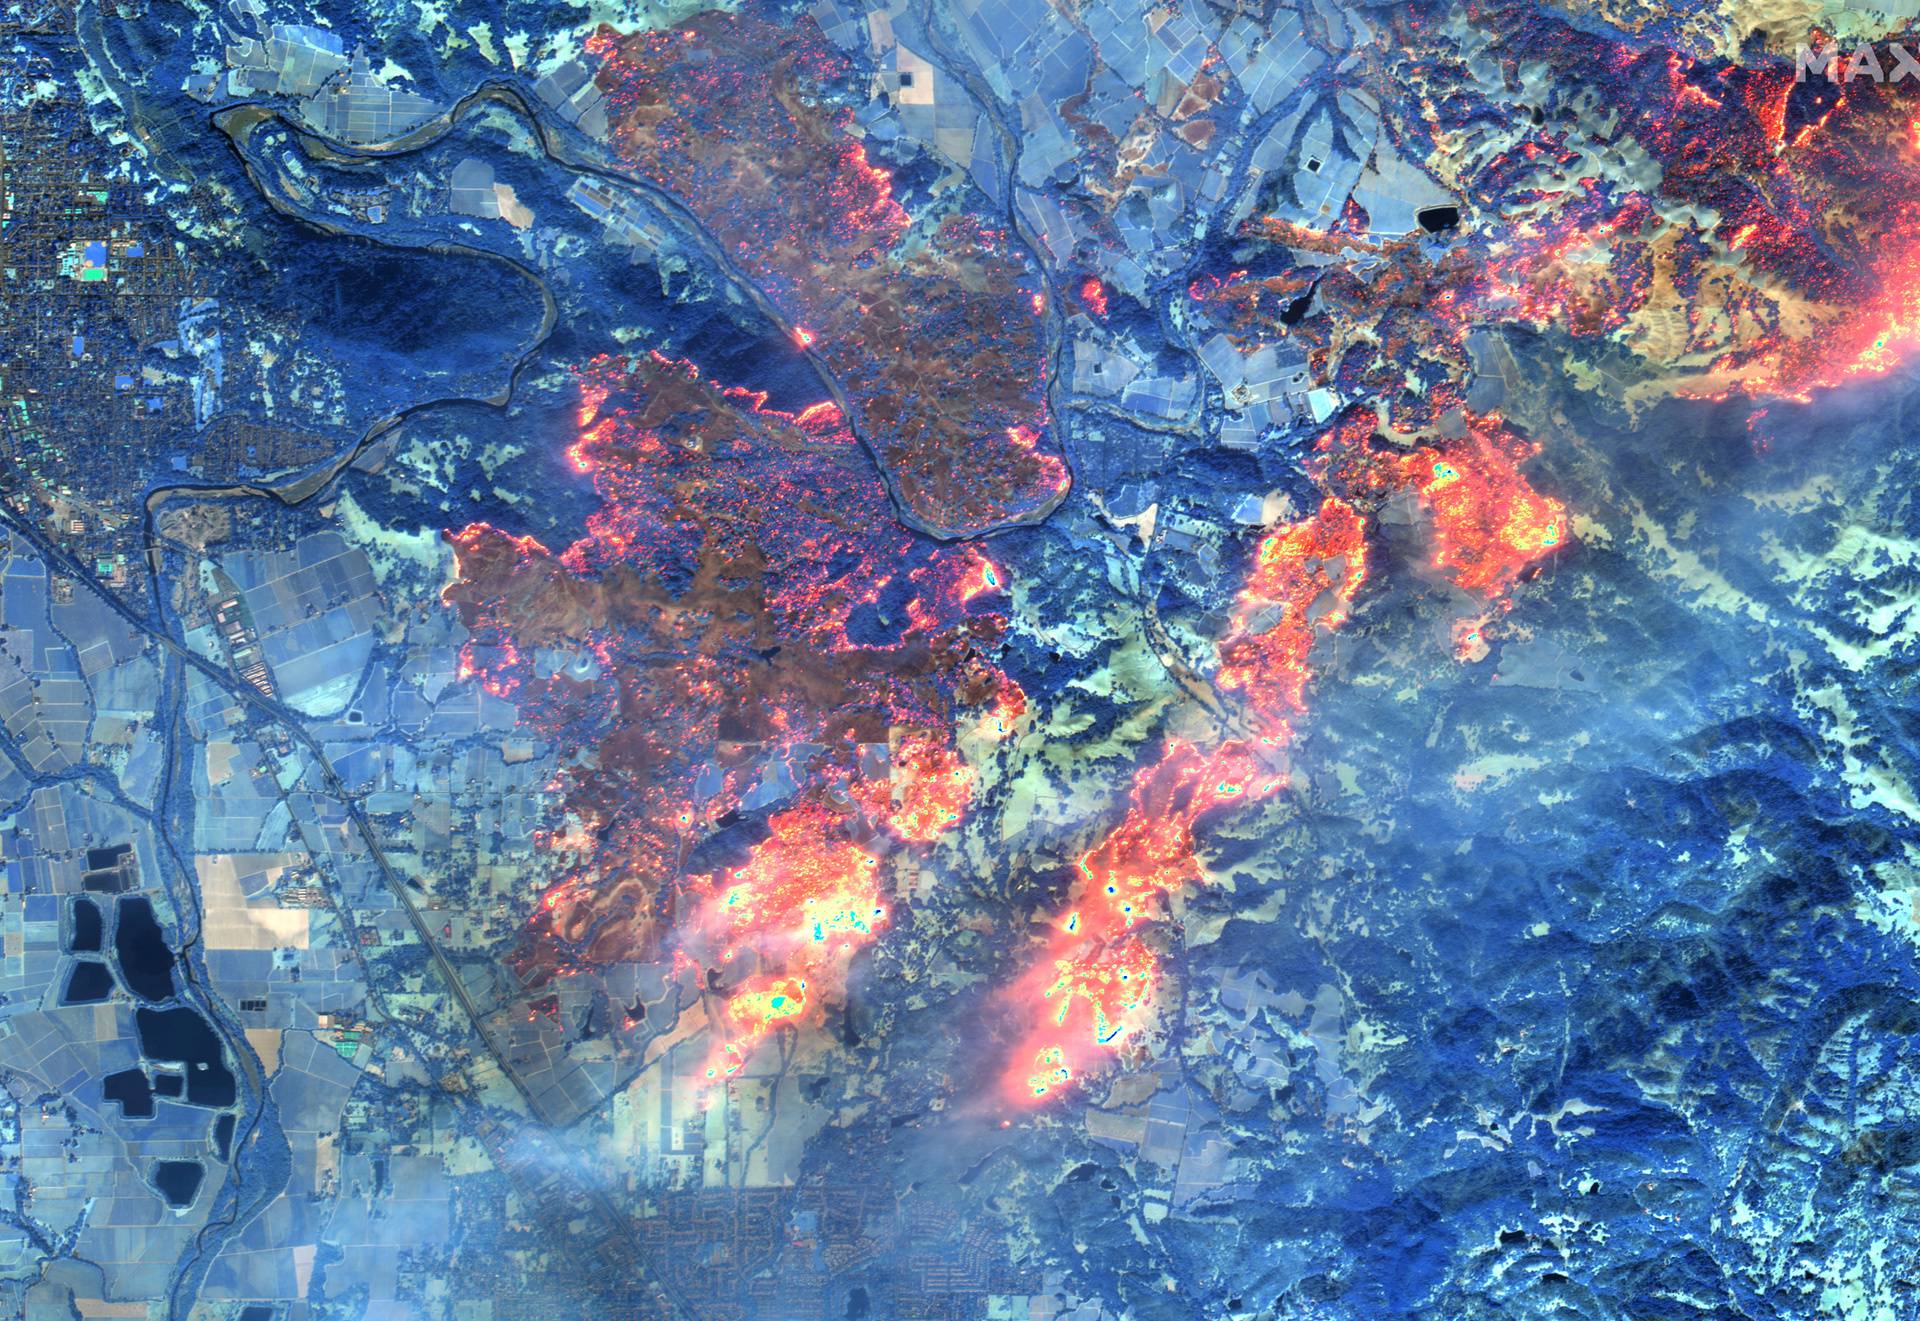 A shortwave infrared (SWIR) satellite image shows the Kincade fire near Healdsburg, California